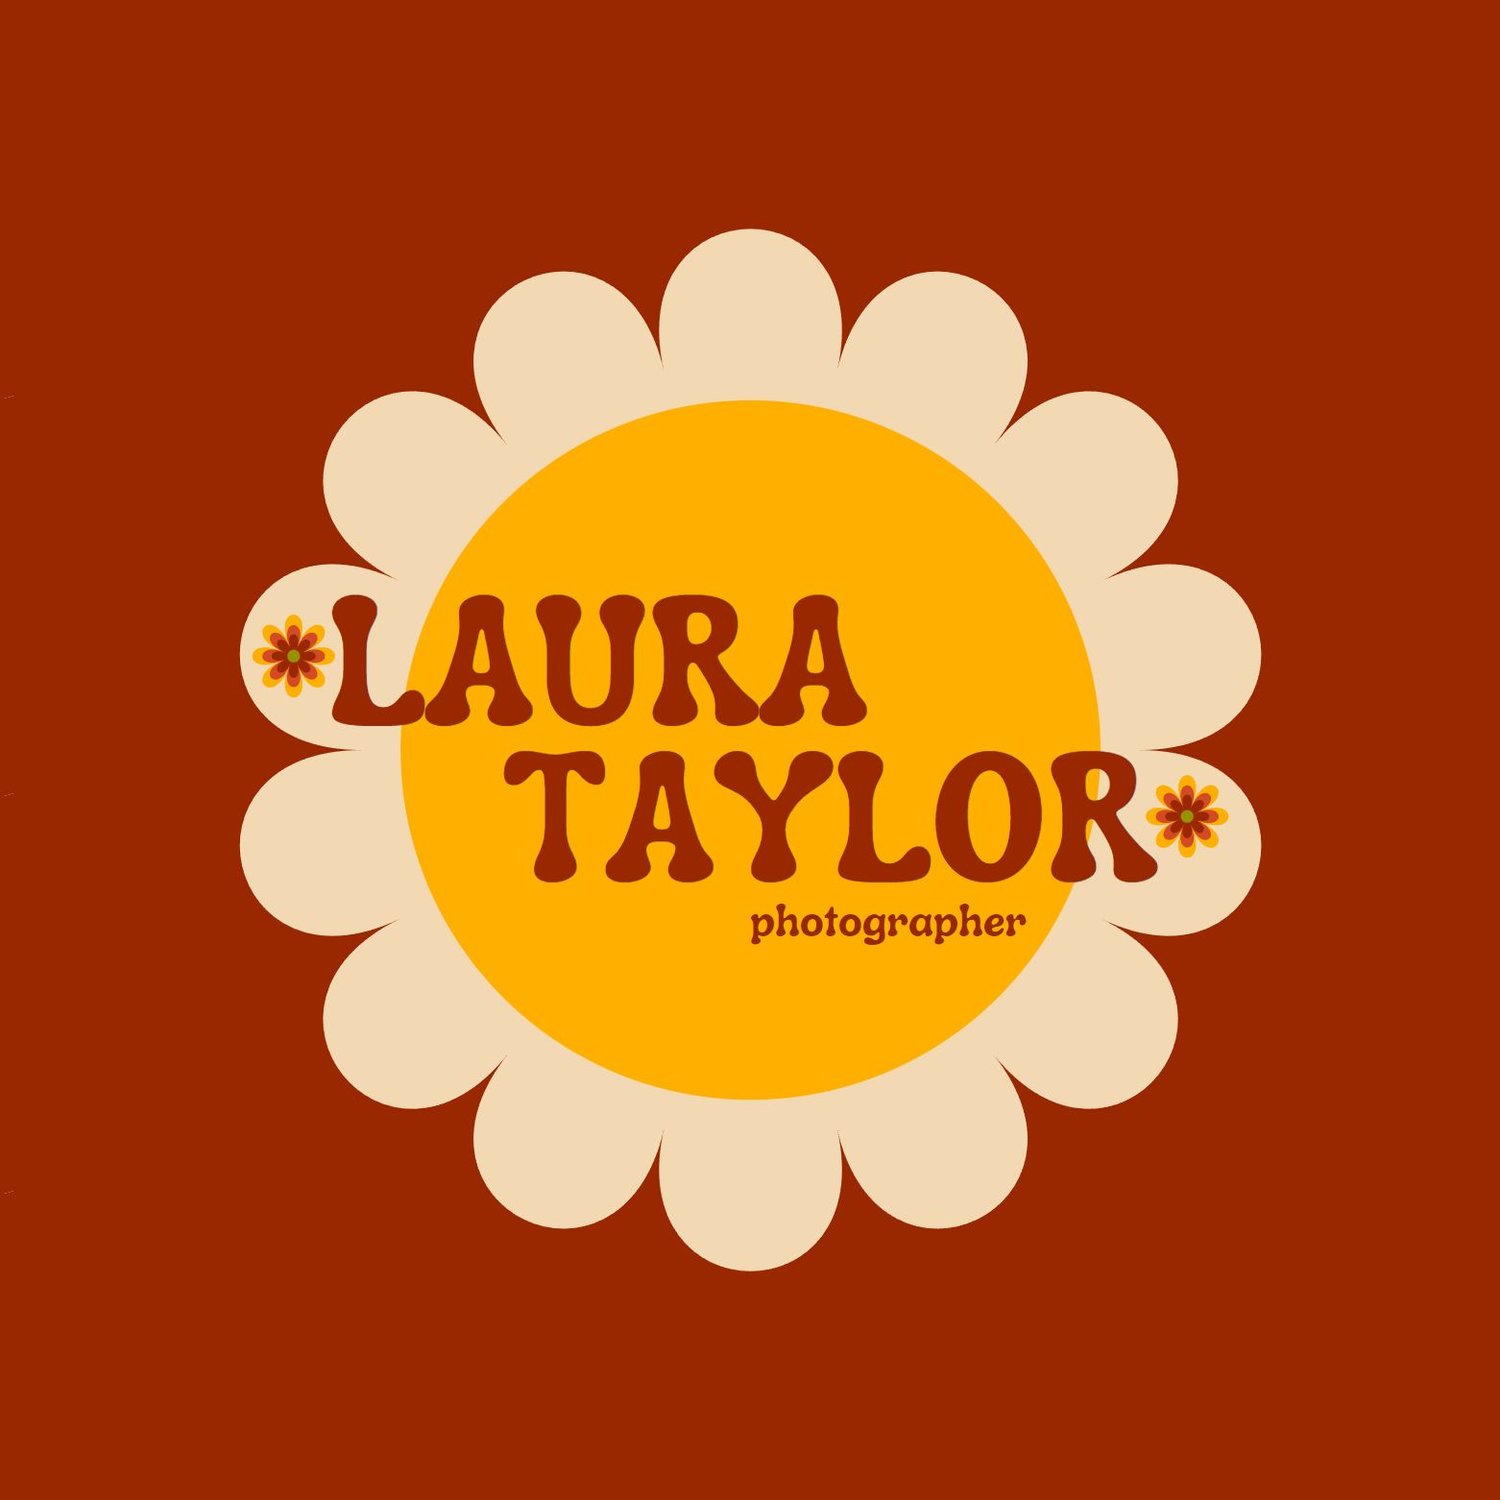 Laura Taylor Photographer